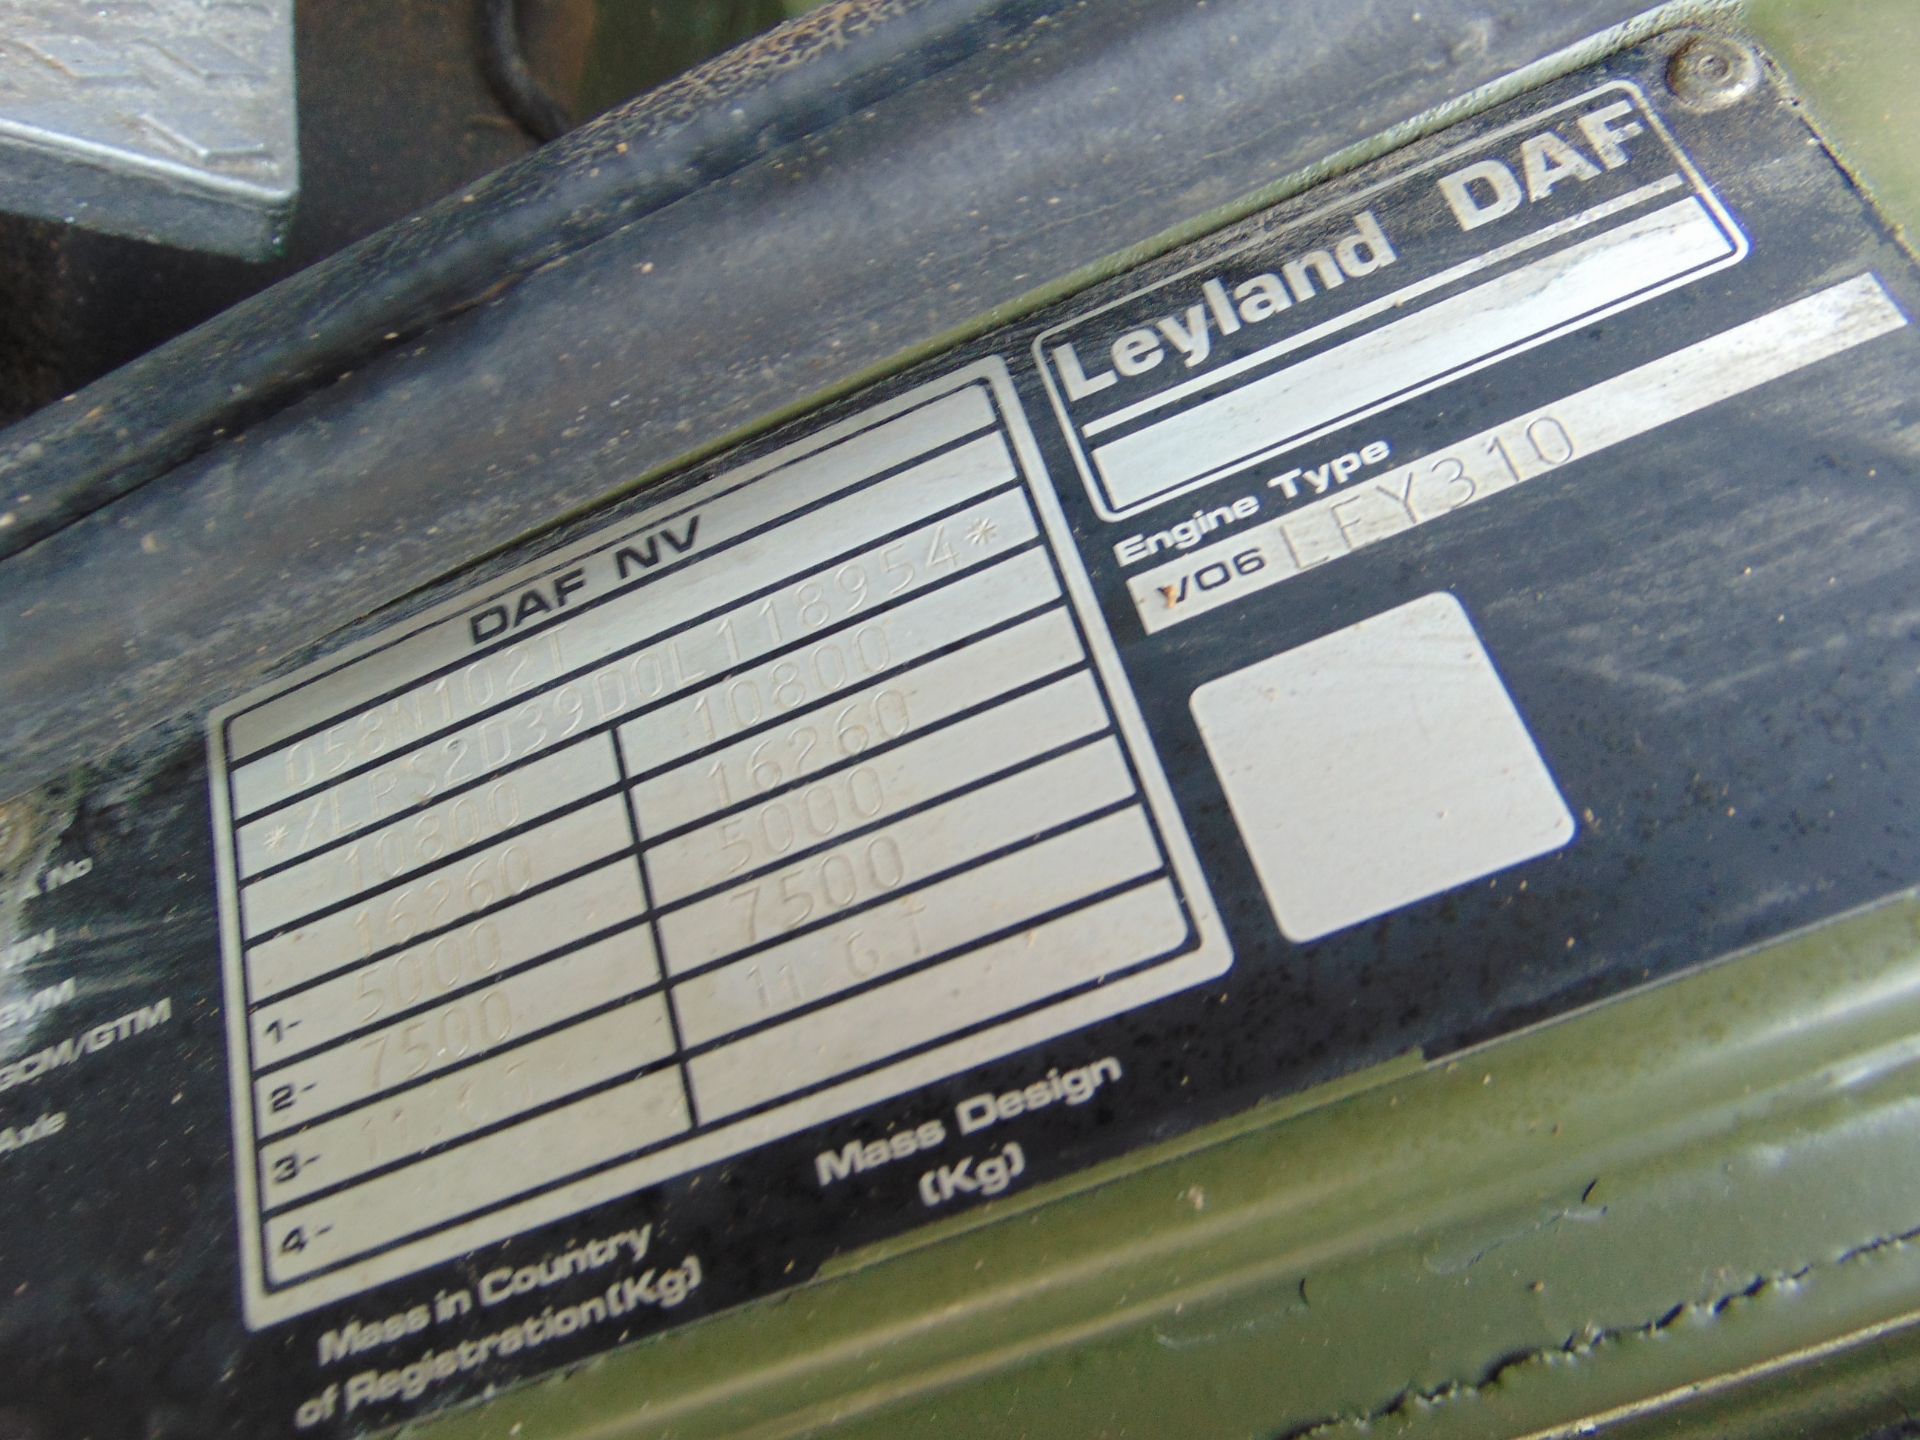 Leyland Daf 45/150 4 x 4 Refueling Truck C/W UBRE Bulk Fuel Dispensing System - Image 23 of 30